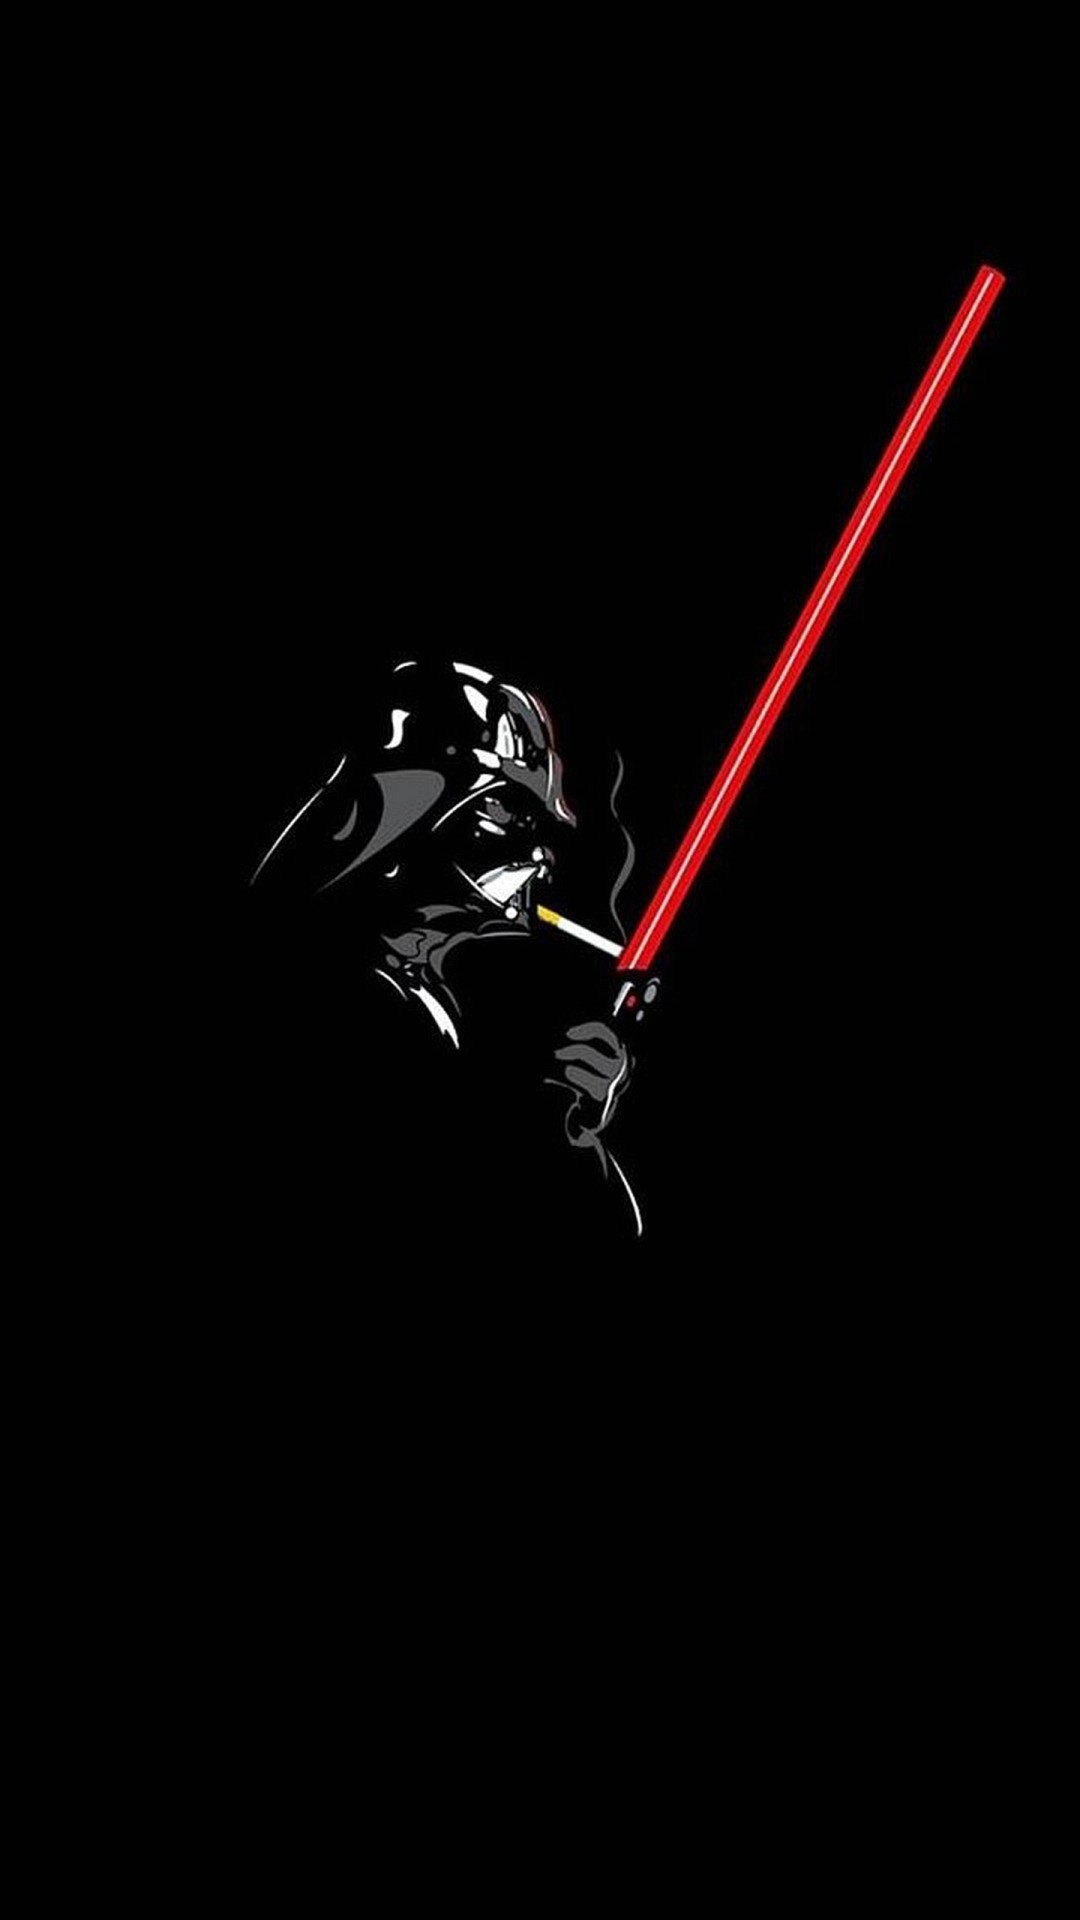 Star Wars The Force Awakens movie  Kylo Ren with lightsaber 2K wallpaper  download